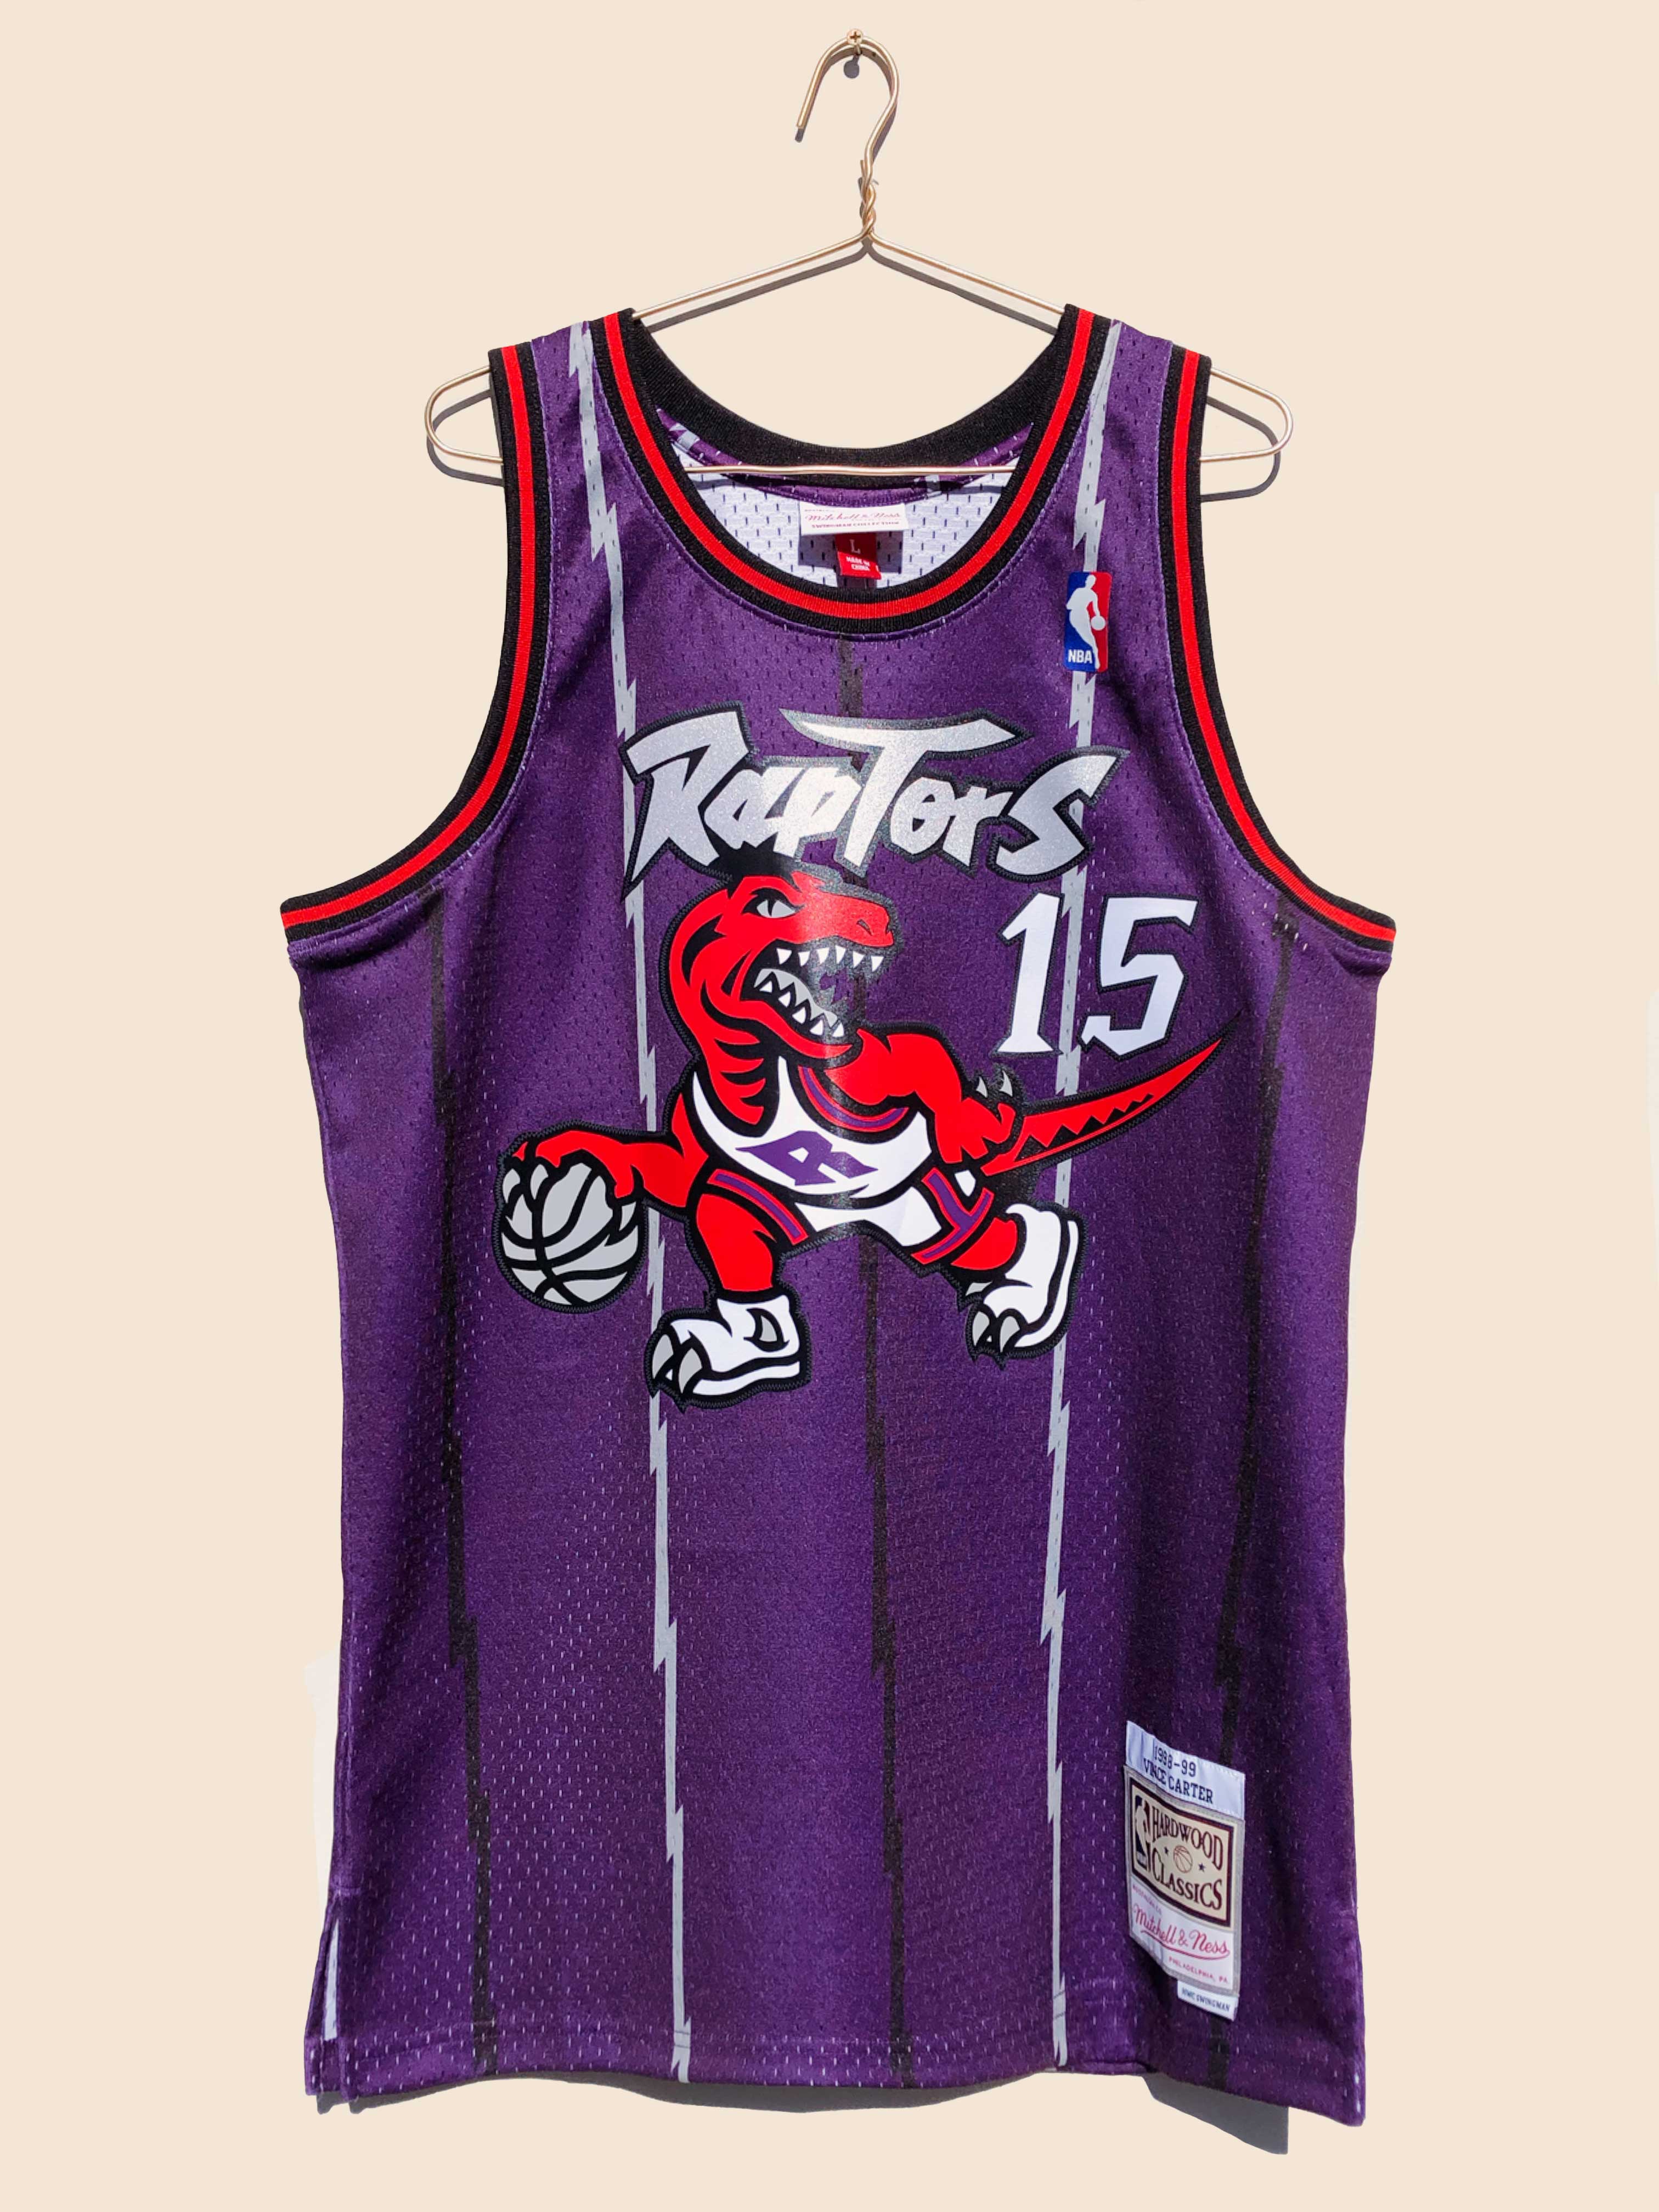 Vince Carter Raptors NBA Jersey for Sale in Lakewood, CA - OfferUp